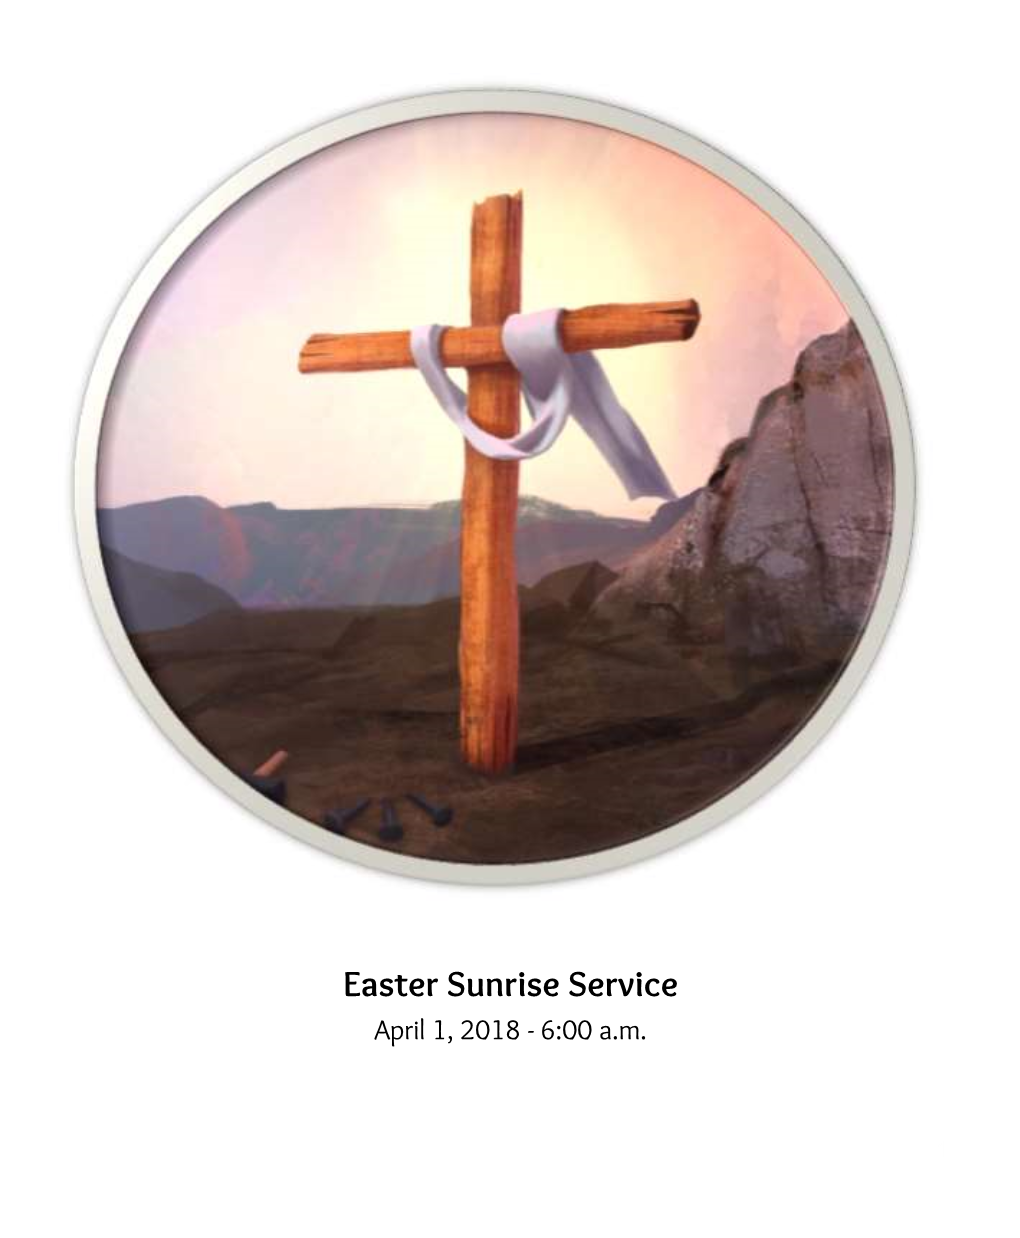 Easter Sunrise Service April 1, 2018 - 6:00 A.M